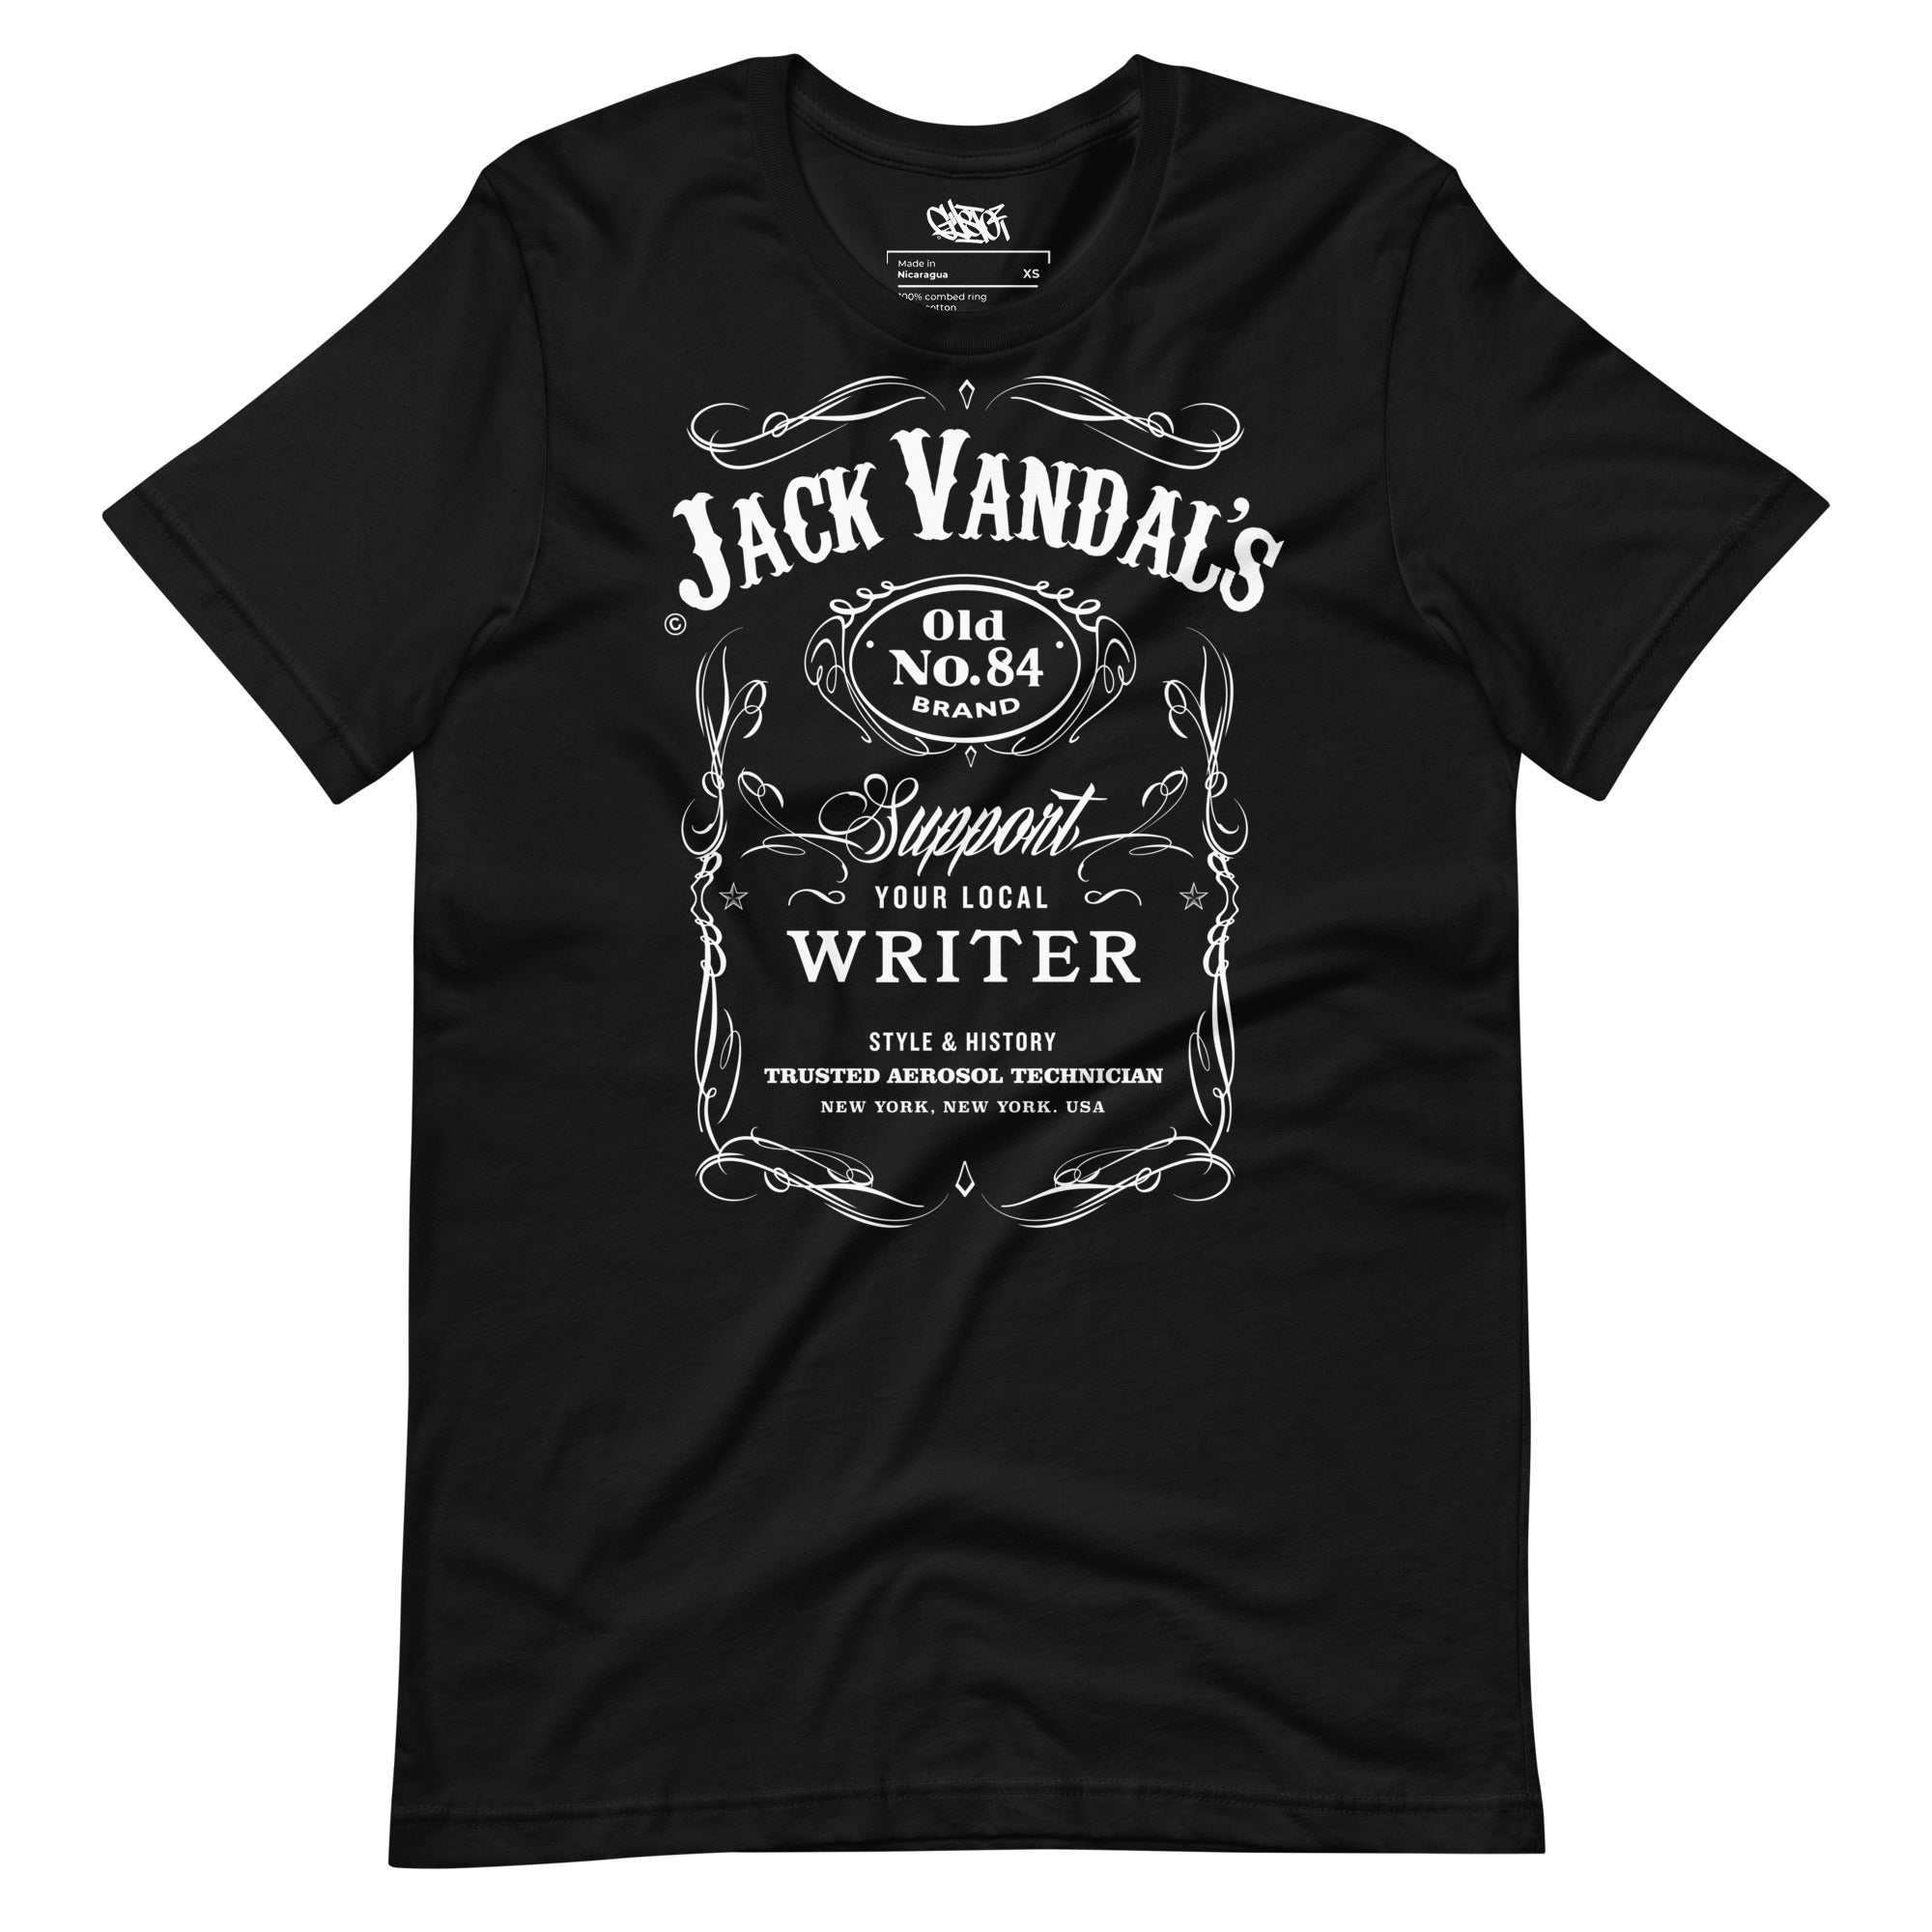 Jack Vandal's Black Label - Short-Sleeve Unisex T-Shirt - GustoNYC